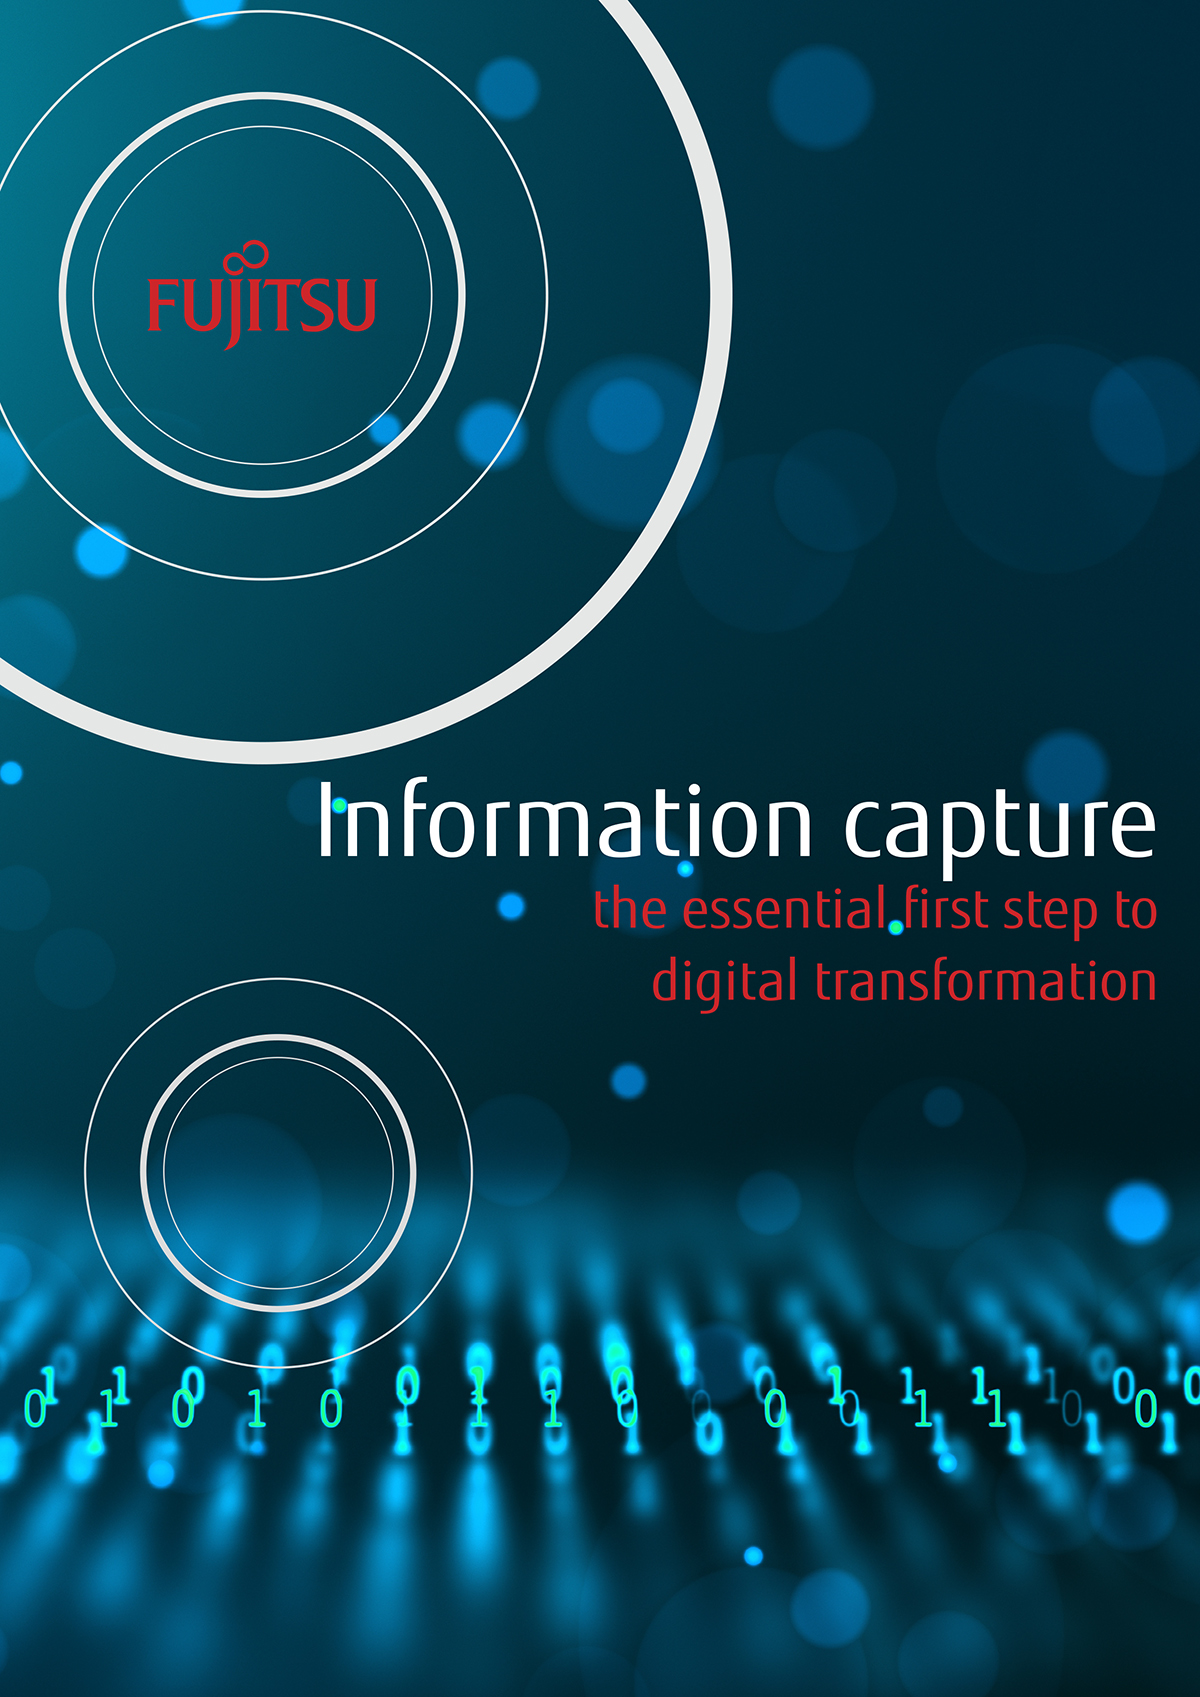 digital transformation, Information Capture